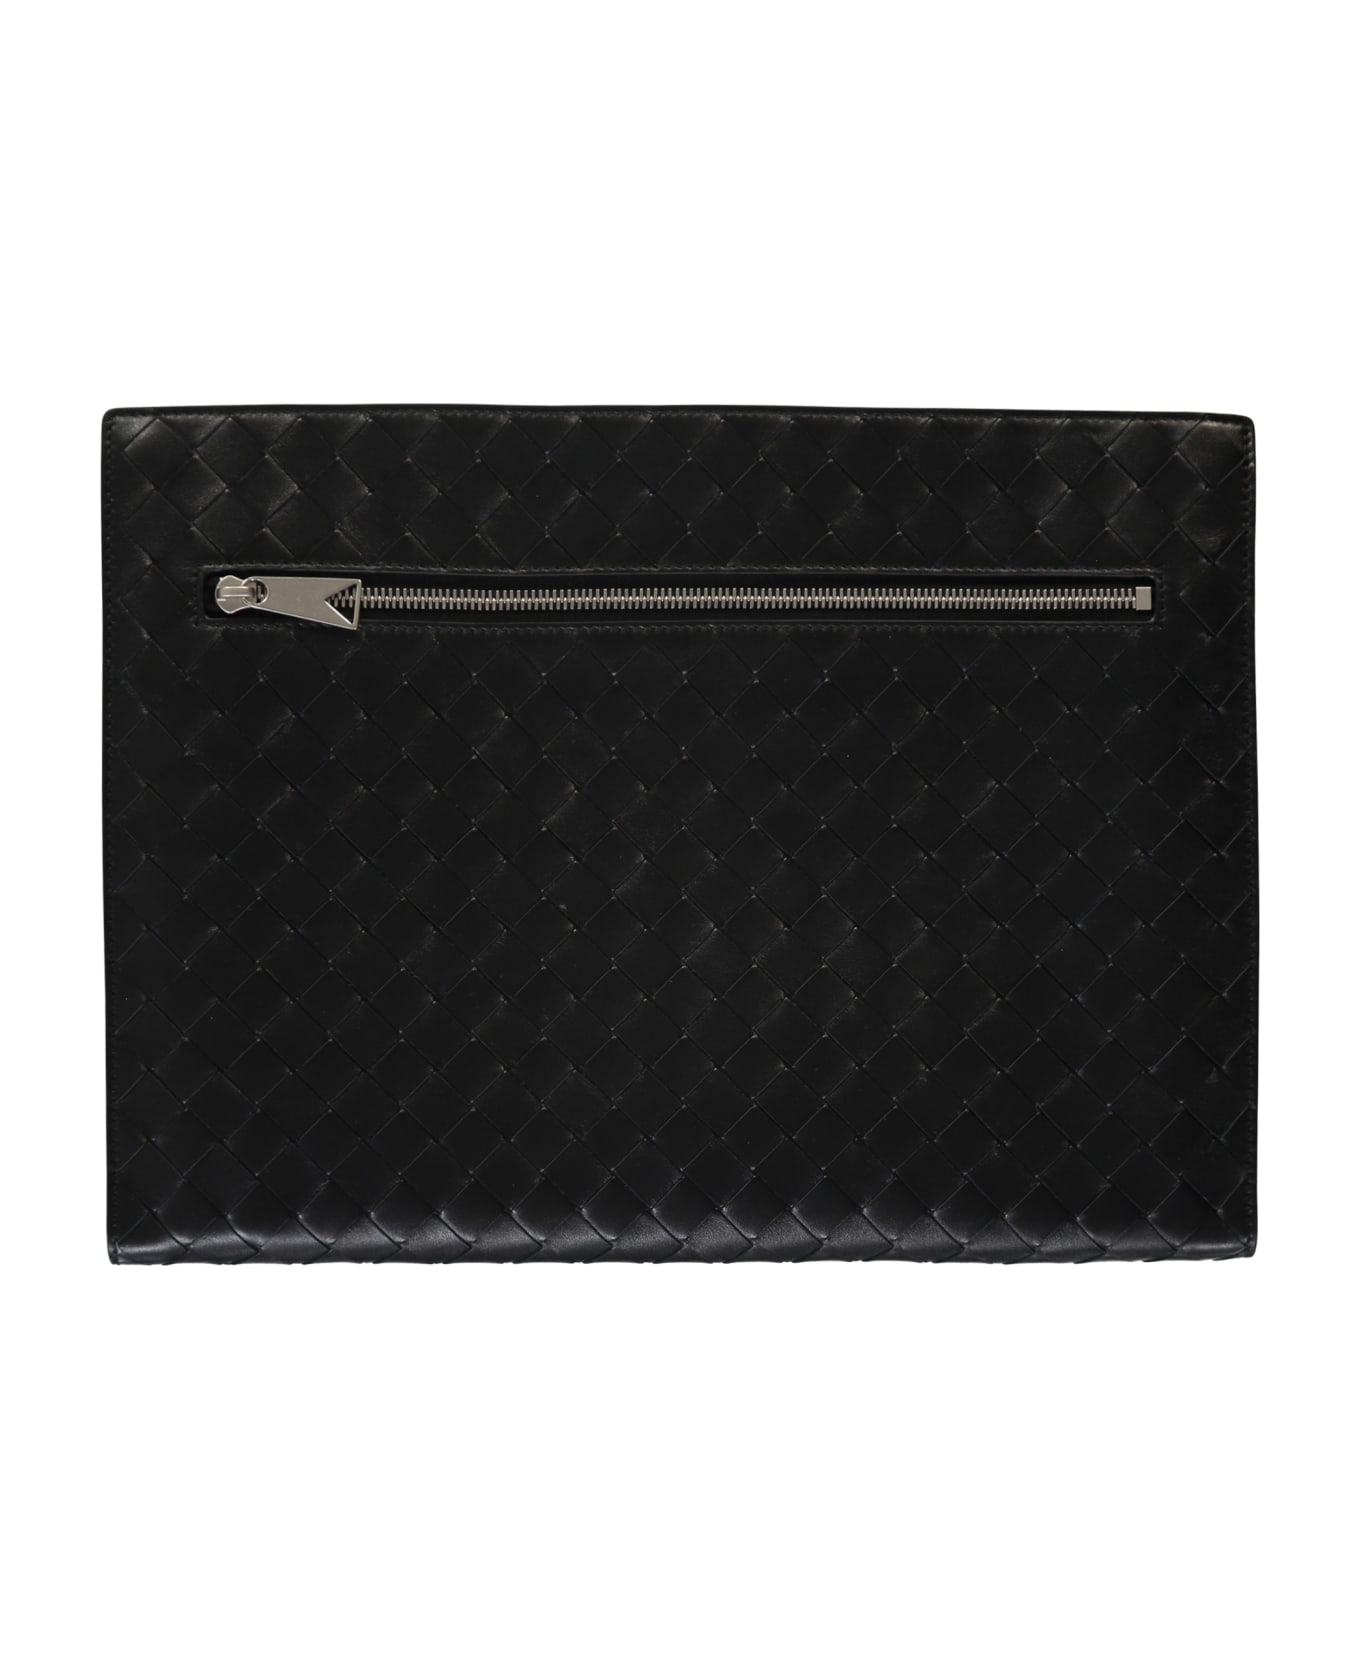 Bottega Veneta Leather Briefcase - black